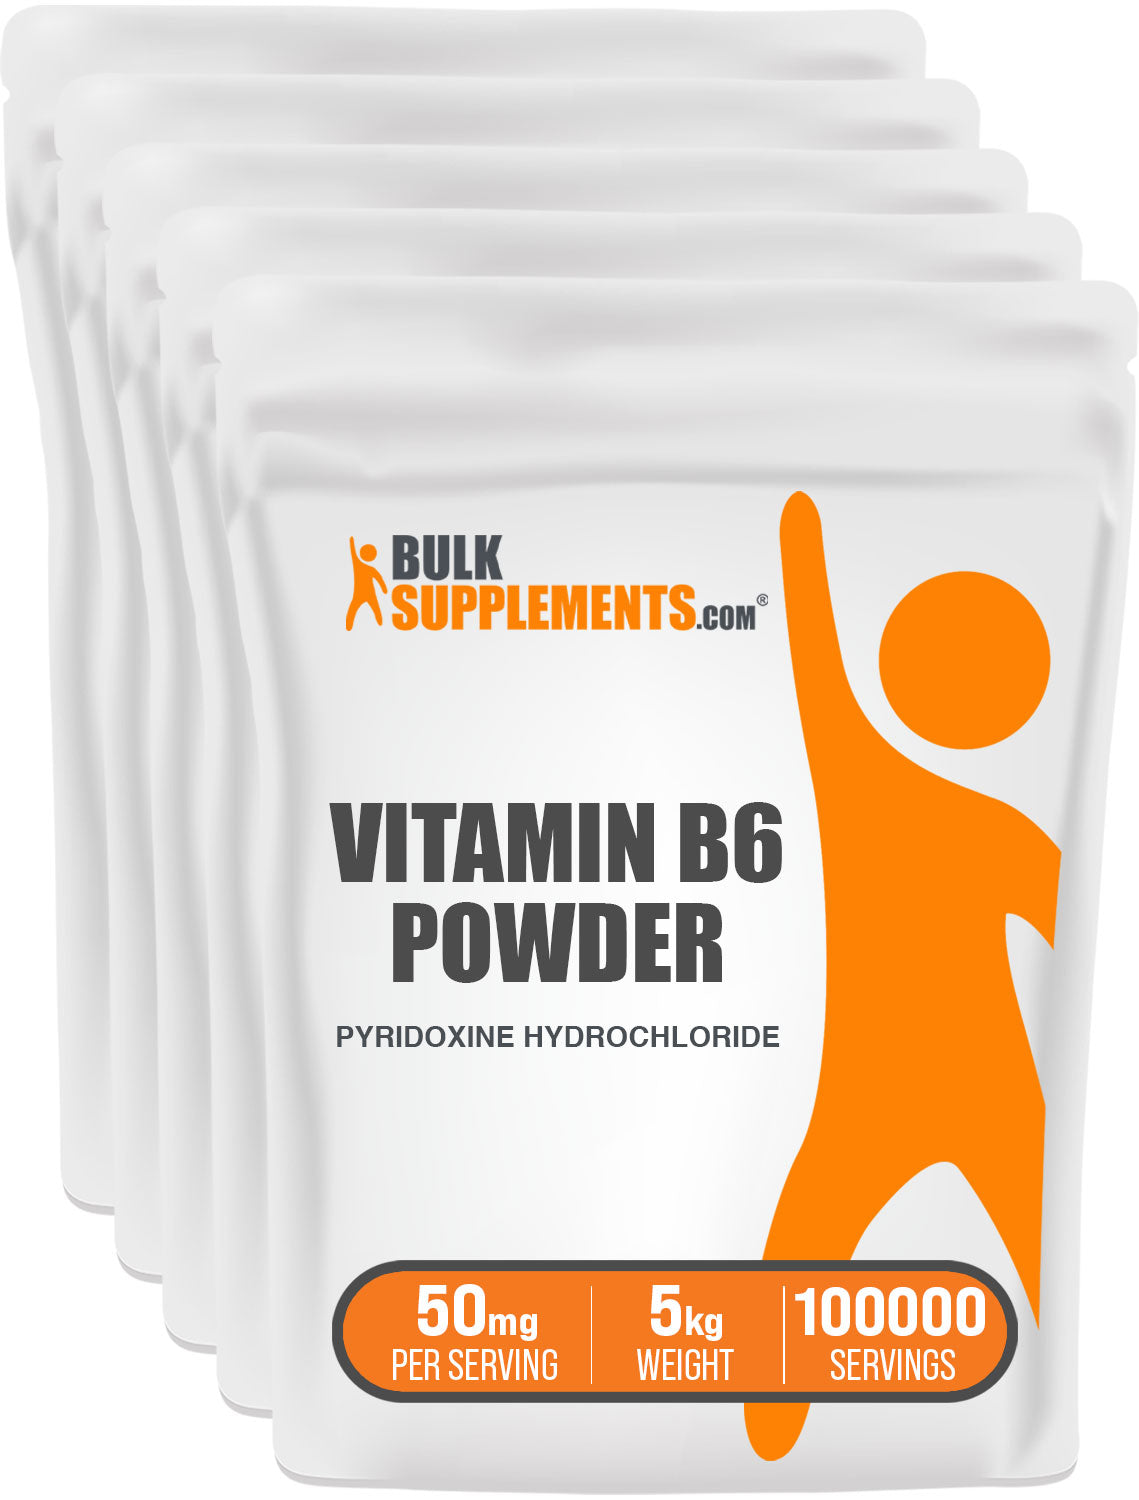 BulkSupplements Vitamin B6 Powder Pyridoxine Hydrochloride 5kg bag